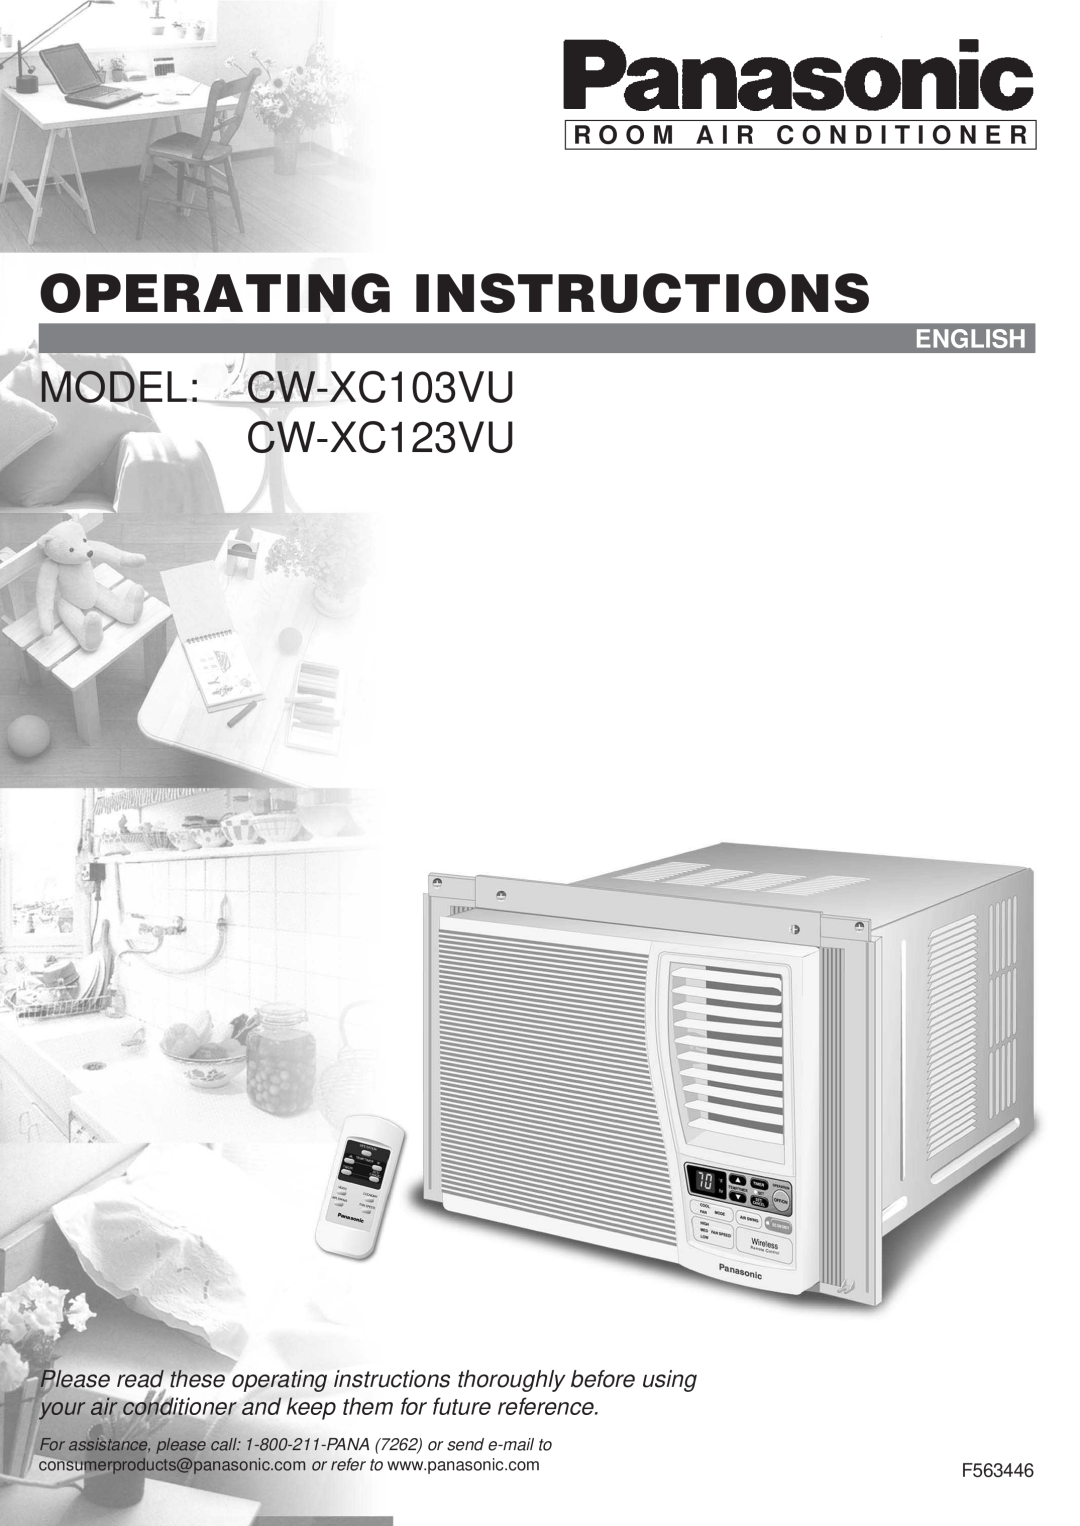 Panasonic manual Operating Instructions, MODEL CW-XC103VU CW-XC123VU, R O O M A I R C O N D I T I O N E R, English 